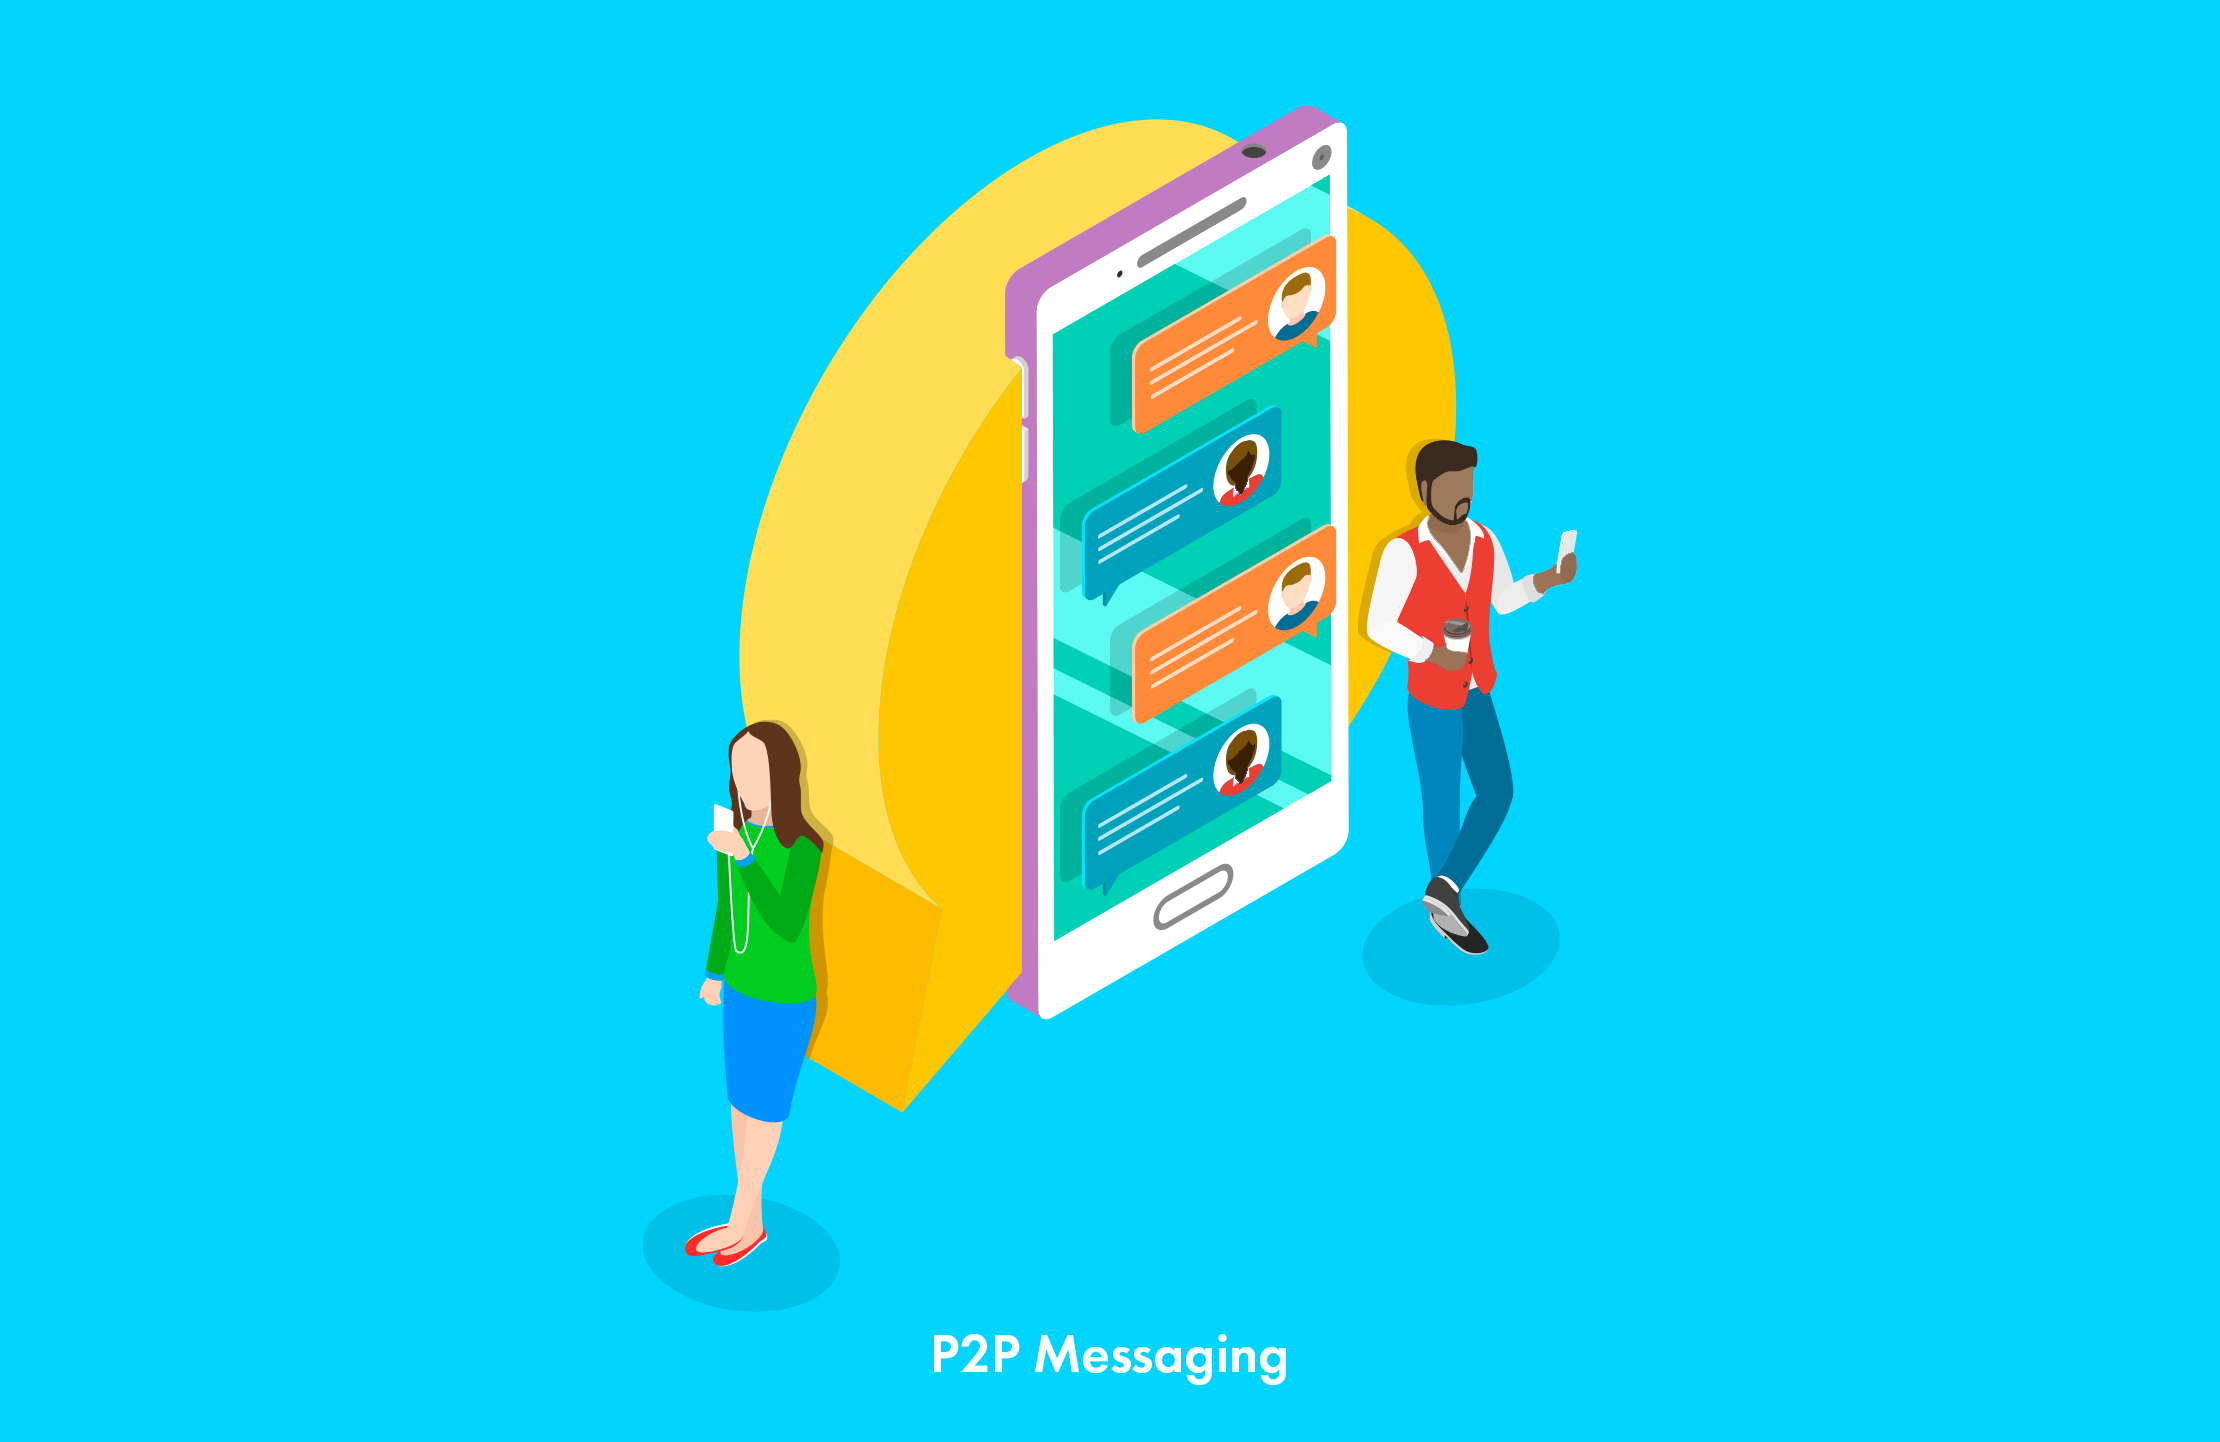 P2P Messaging